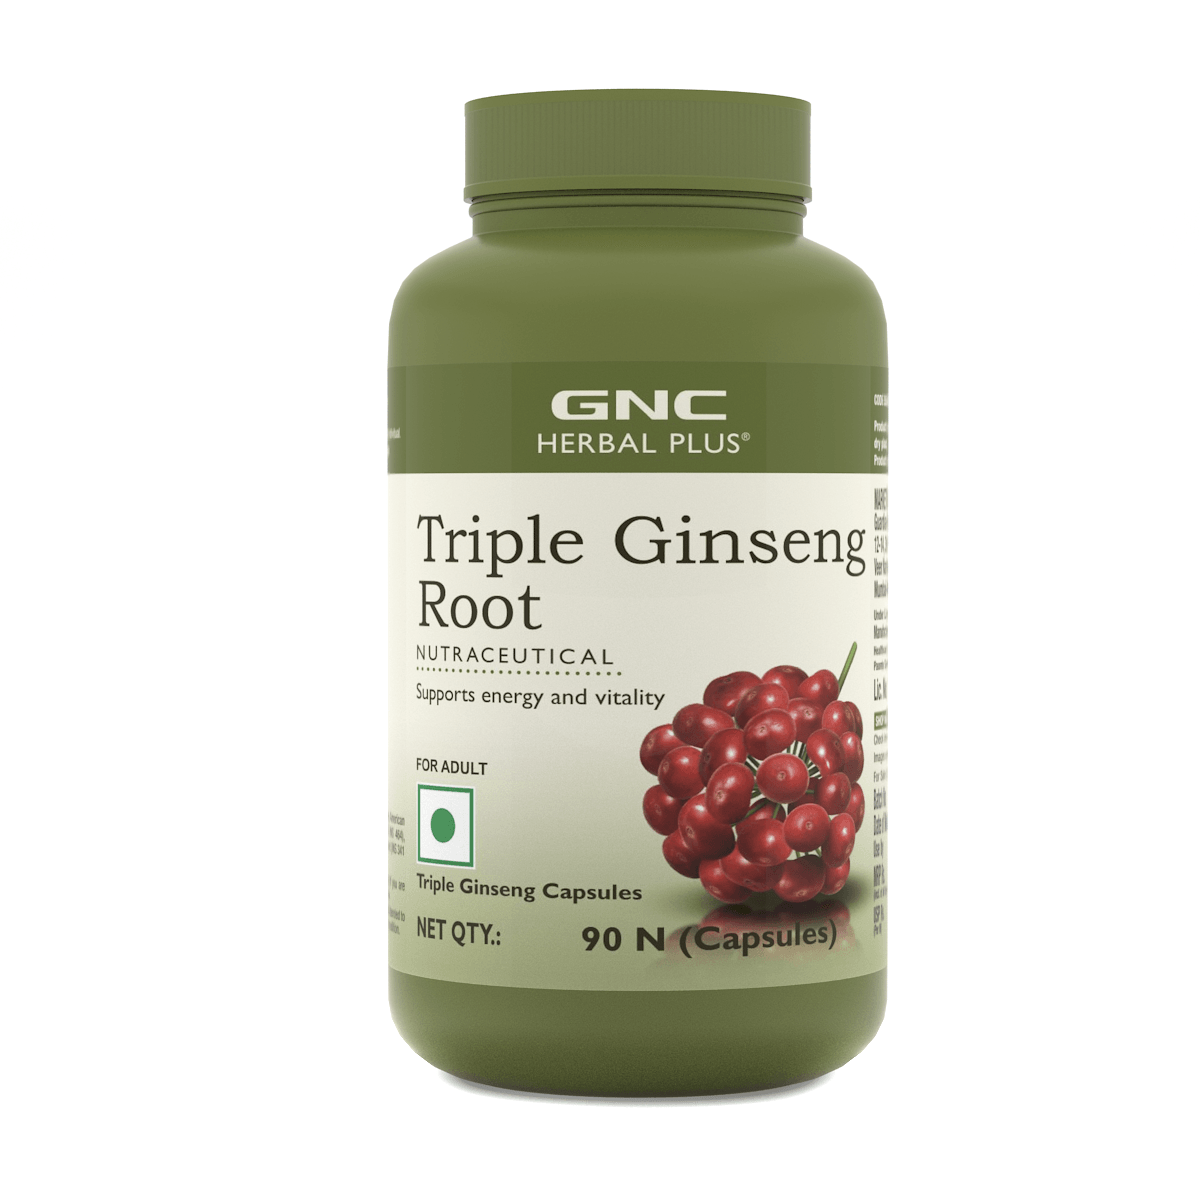 GNC Herbal Plus Triple Ginseng Root - Boosts Sexual Energy & Vitality